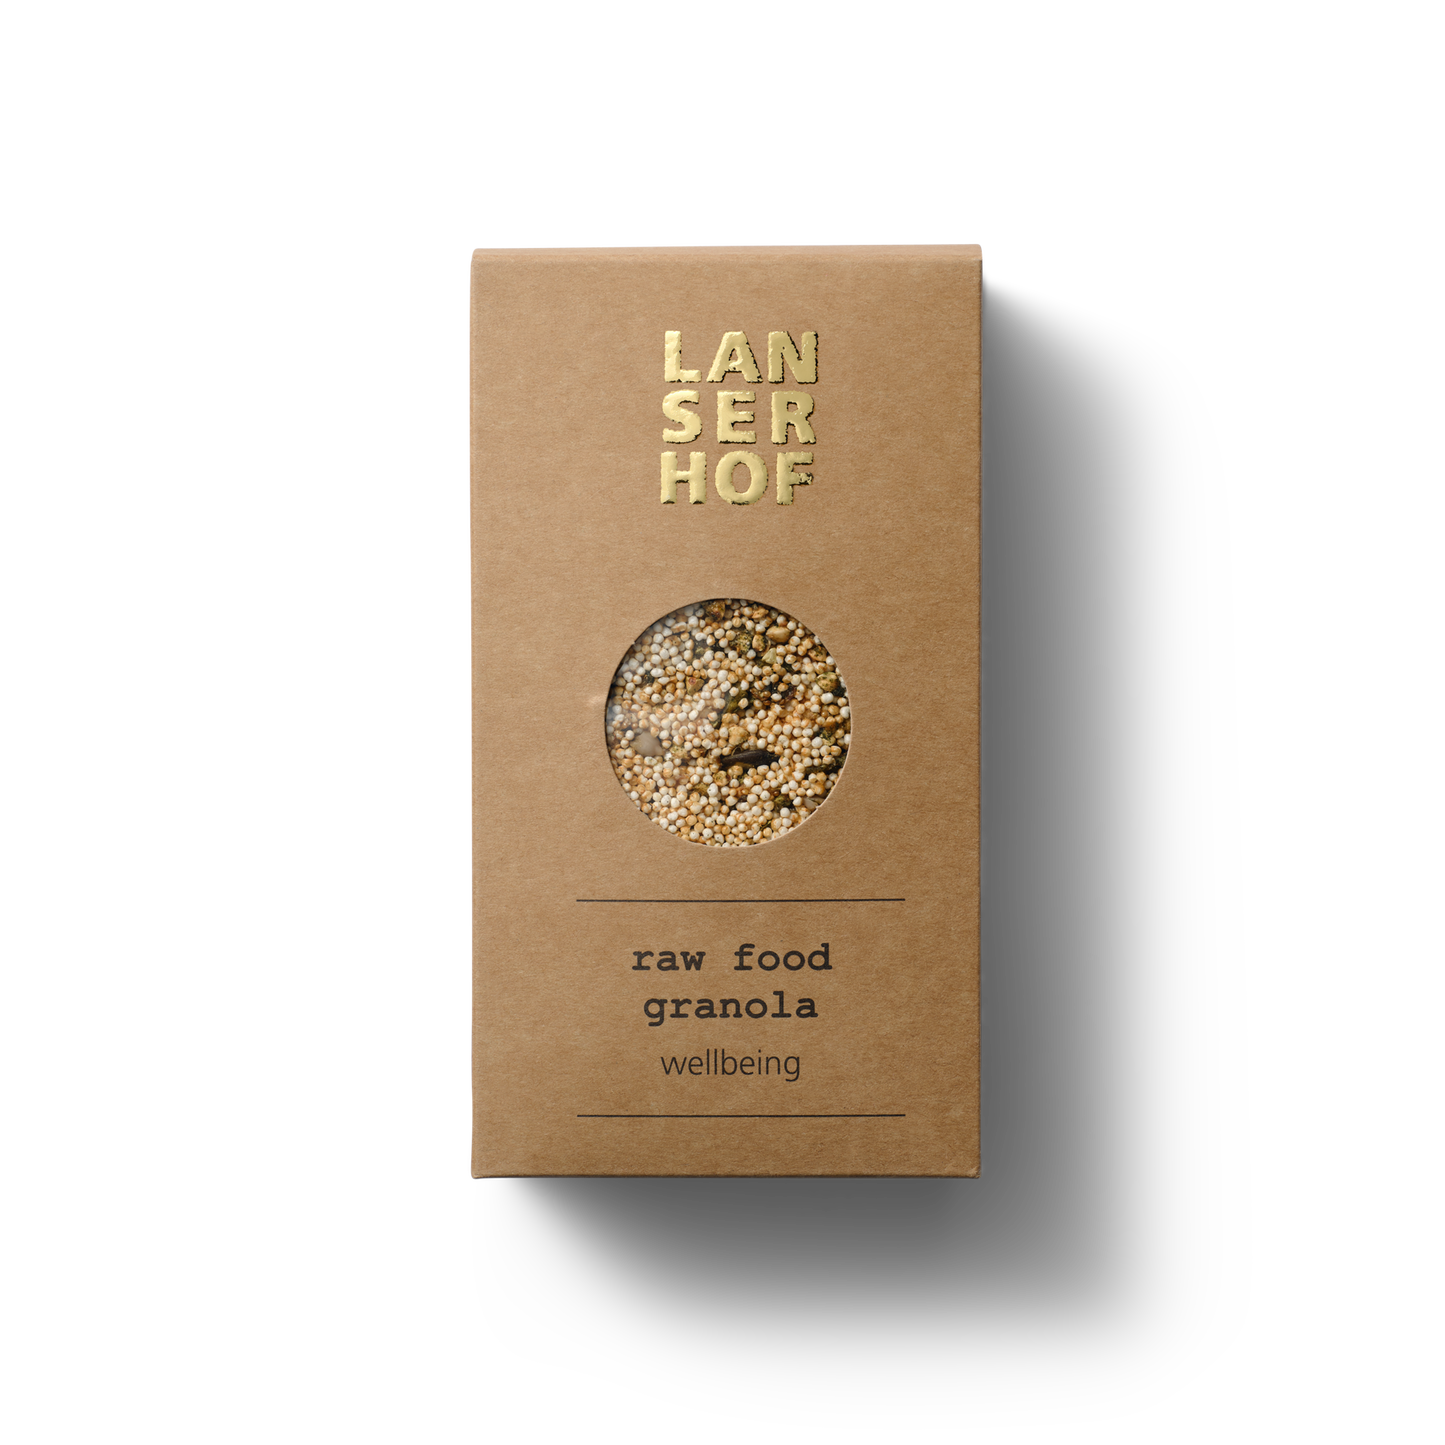 Lanserhof organic raw food granola - well being